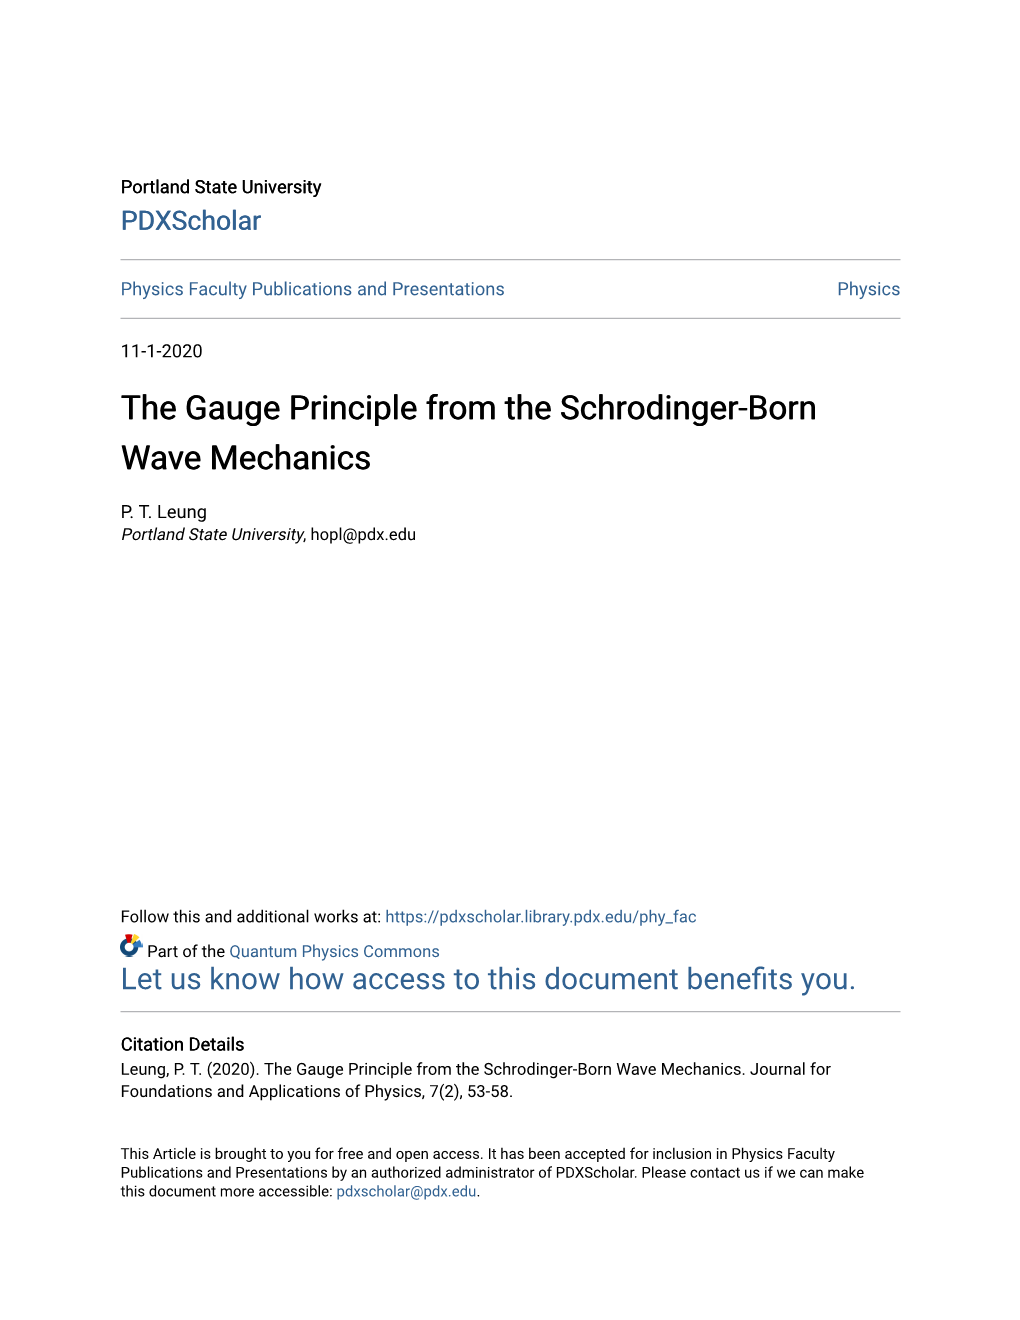 The Gauge Principle from the Schrodinger-Born Wave Mechanics